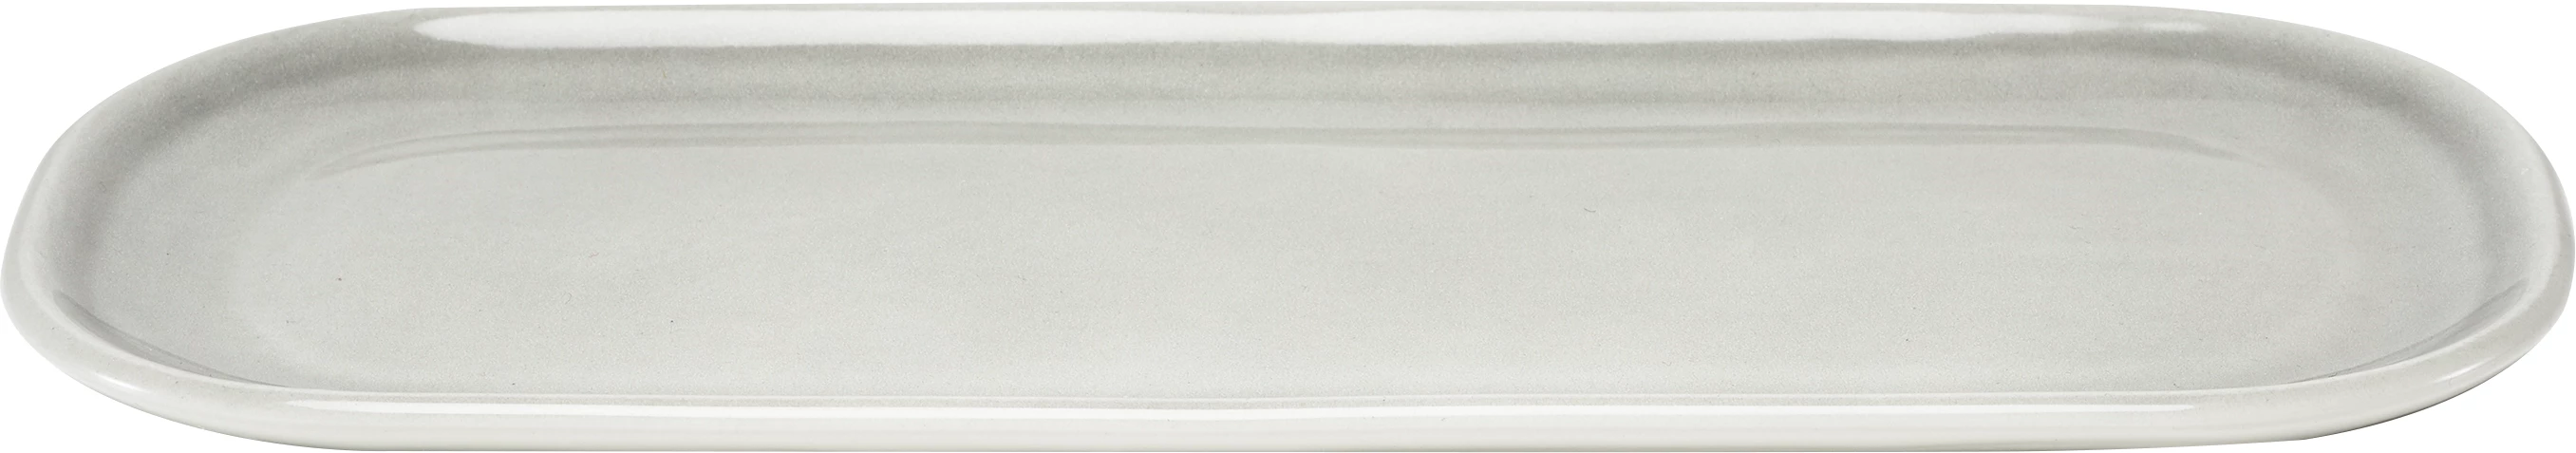 Figgjo Pax tallerken, oval, grå, 30 x 13 cm